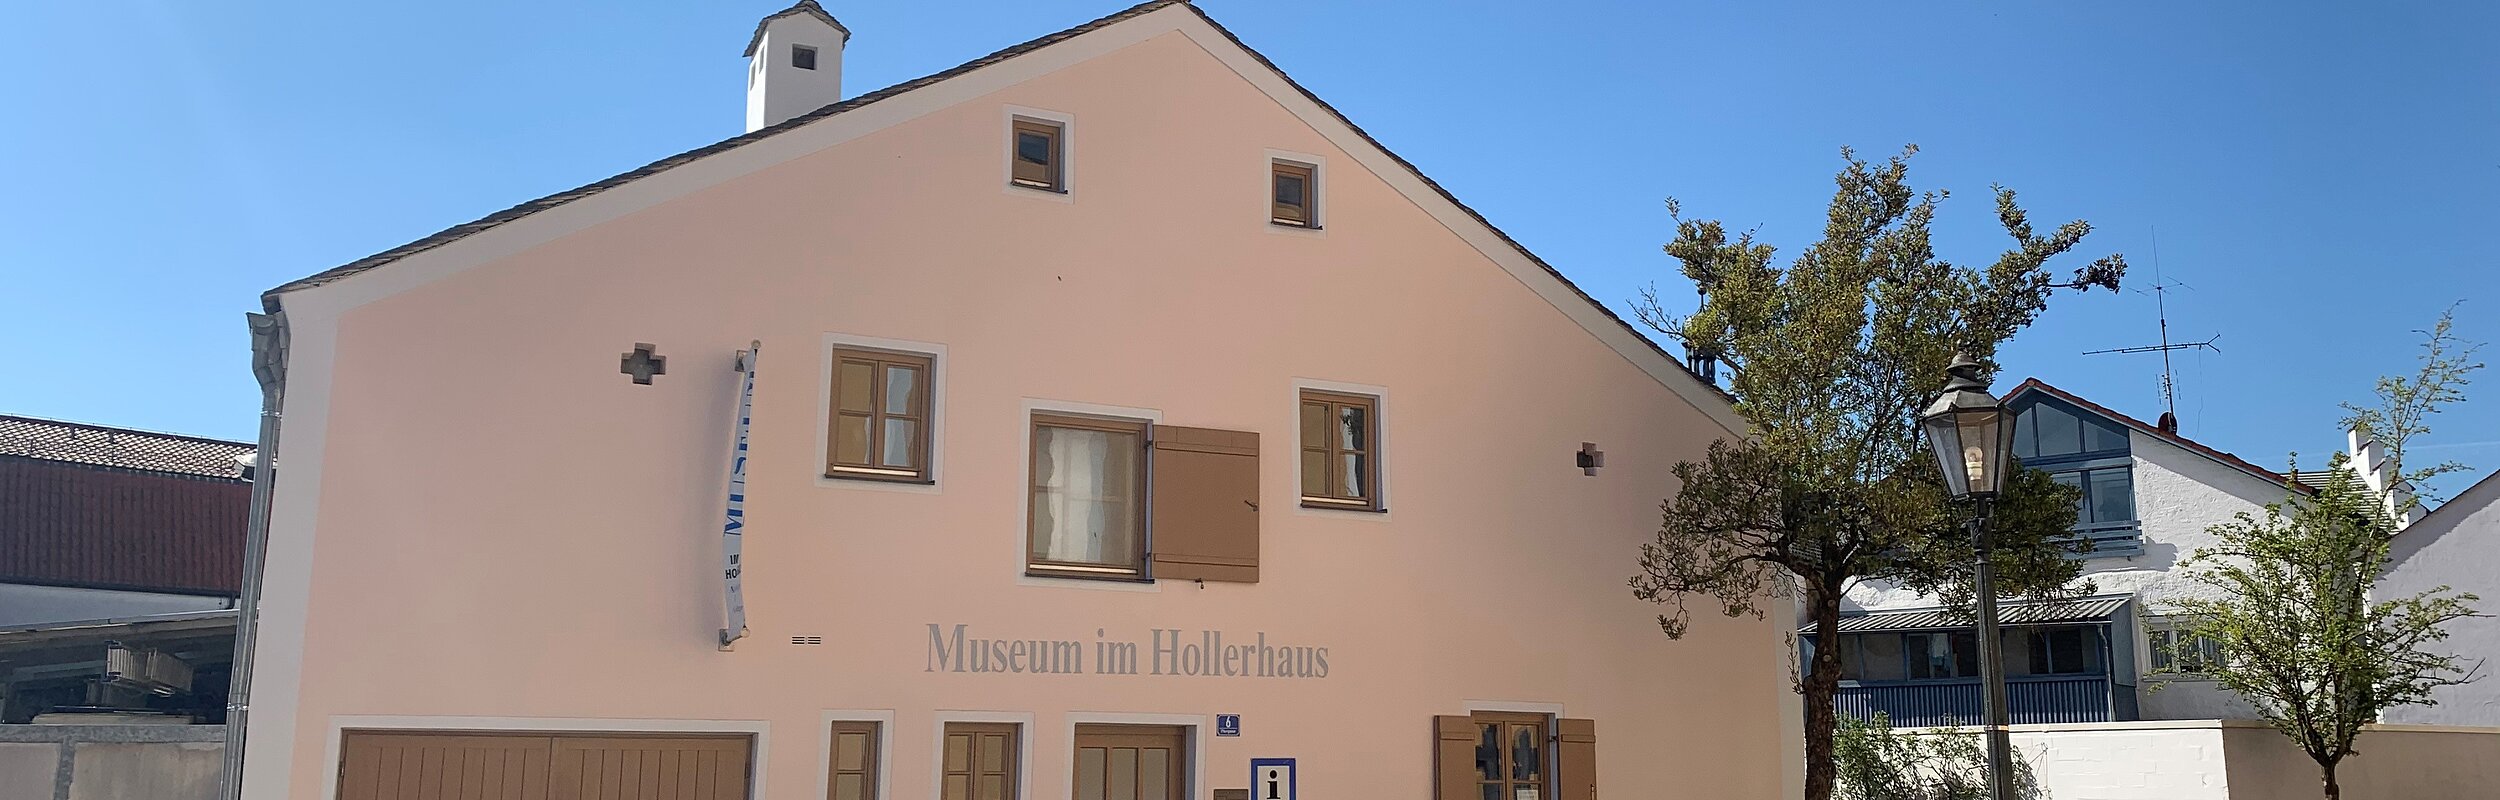 Museum Hollerhaus